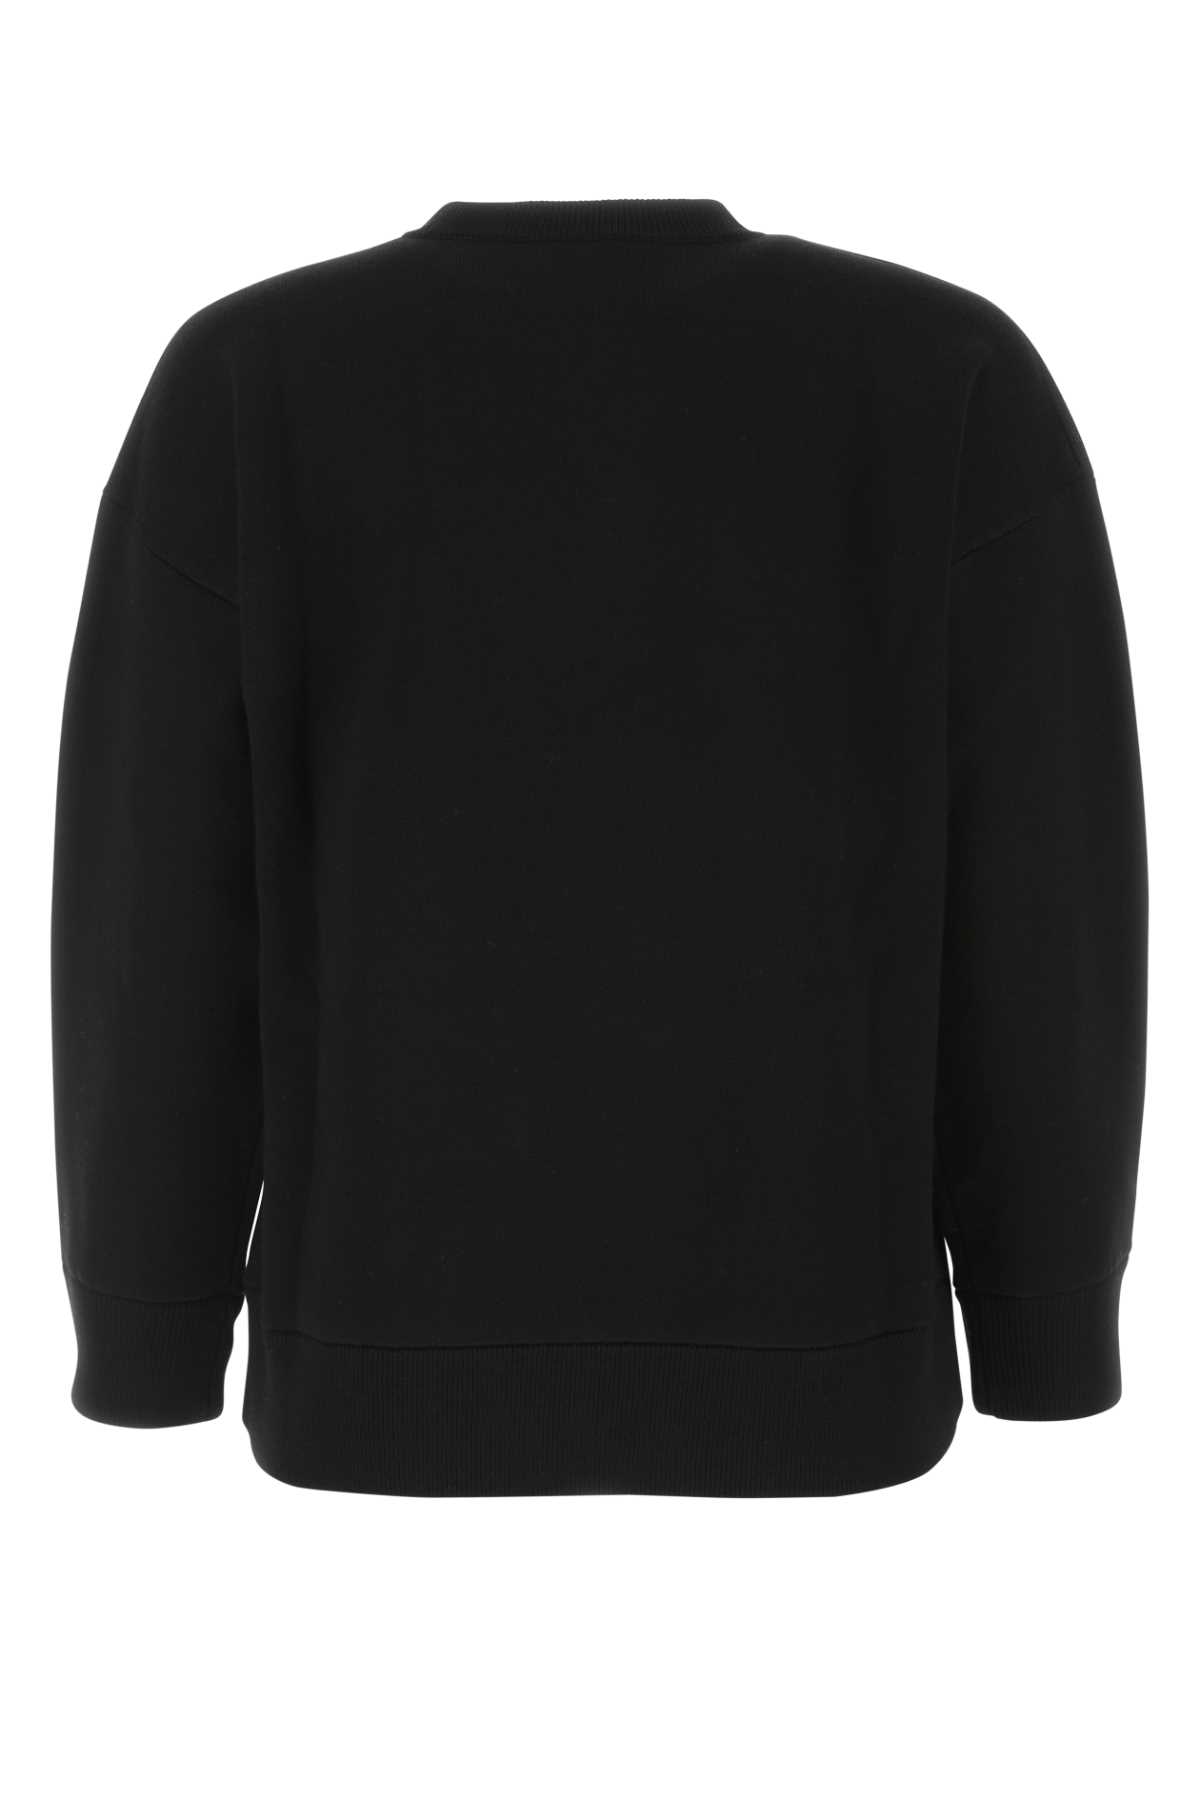 Burberry Black Stretch Wool Blend Sweater In A1189